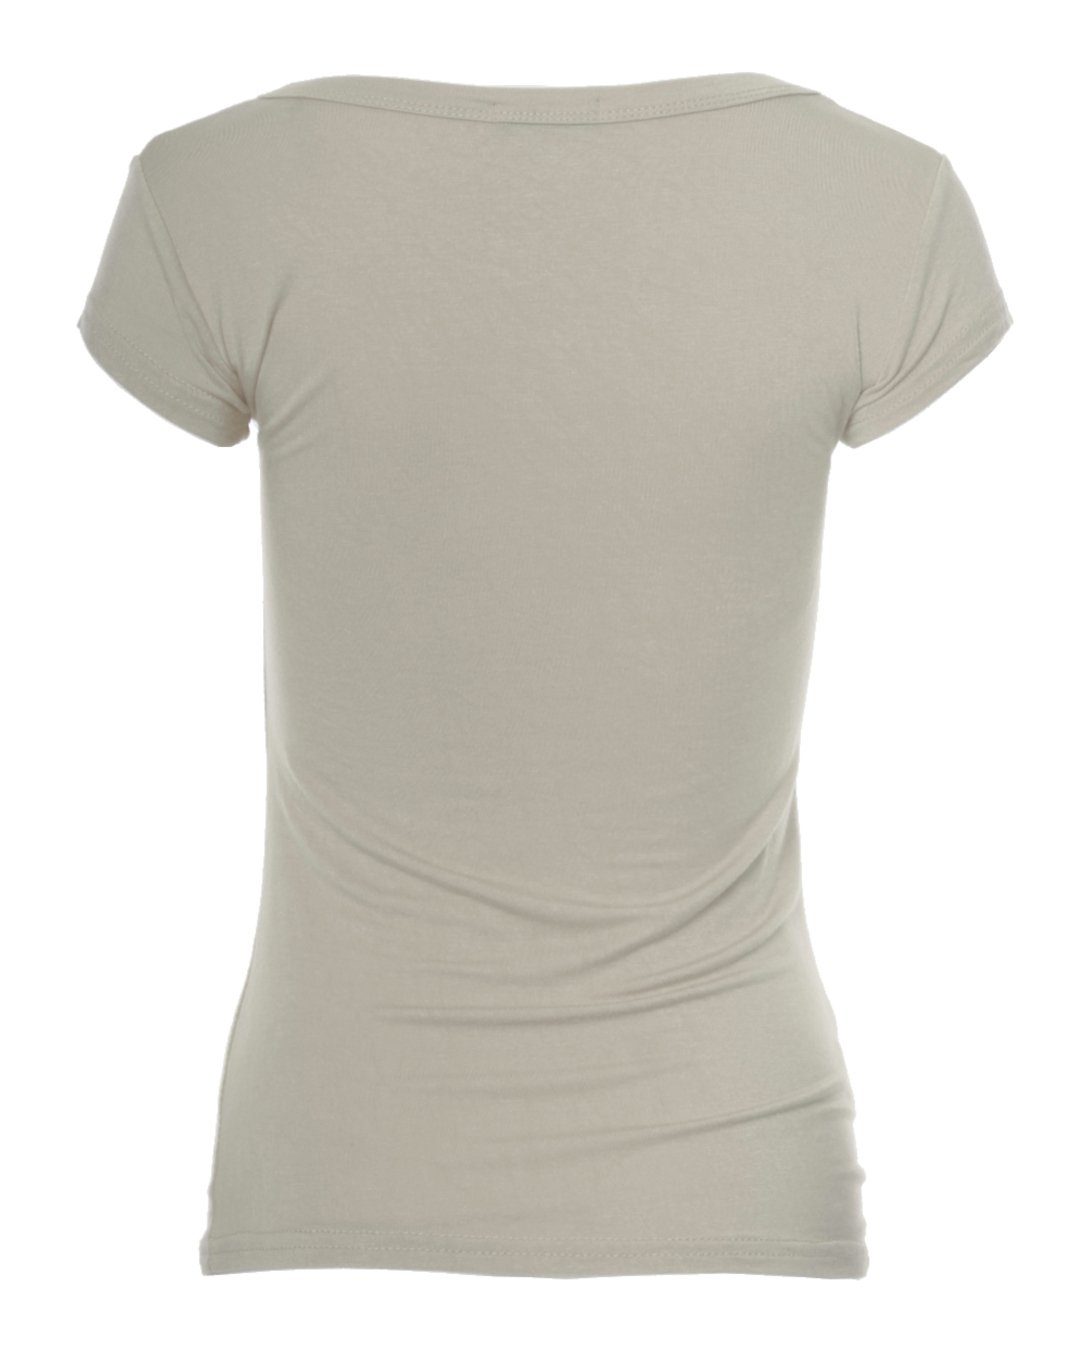 Muse T-Shirt Basic Kurzarm Fit T-Shirt taupe Skinny 1001